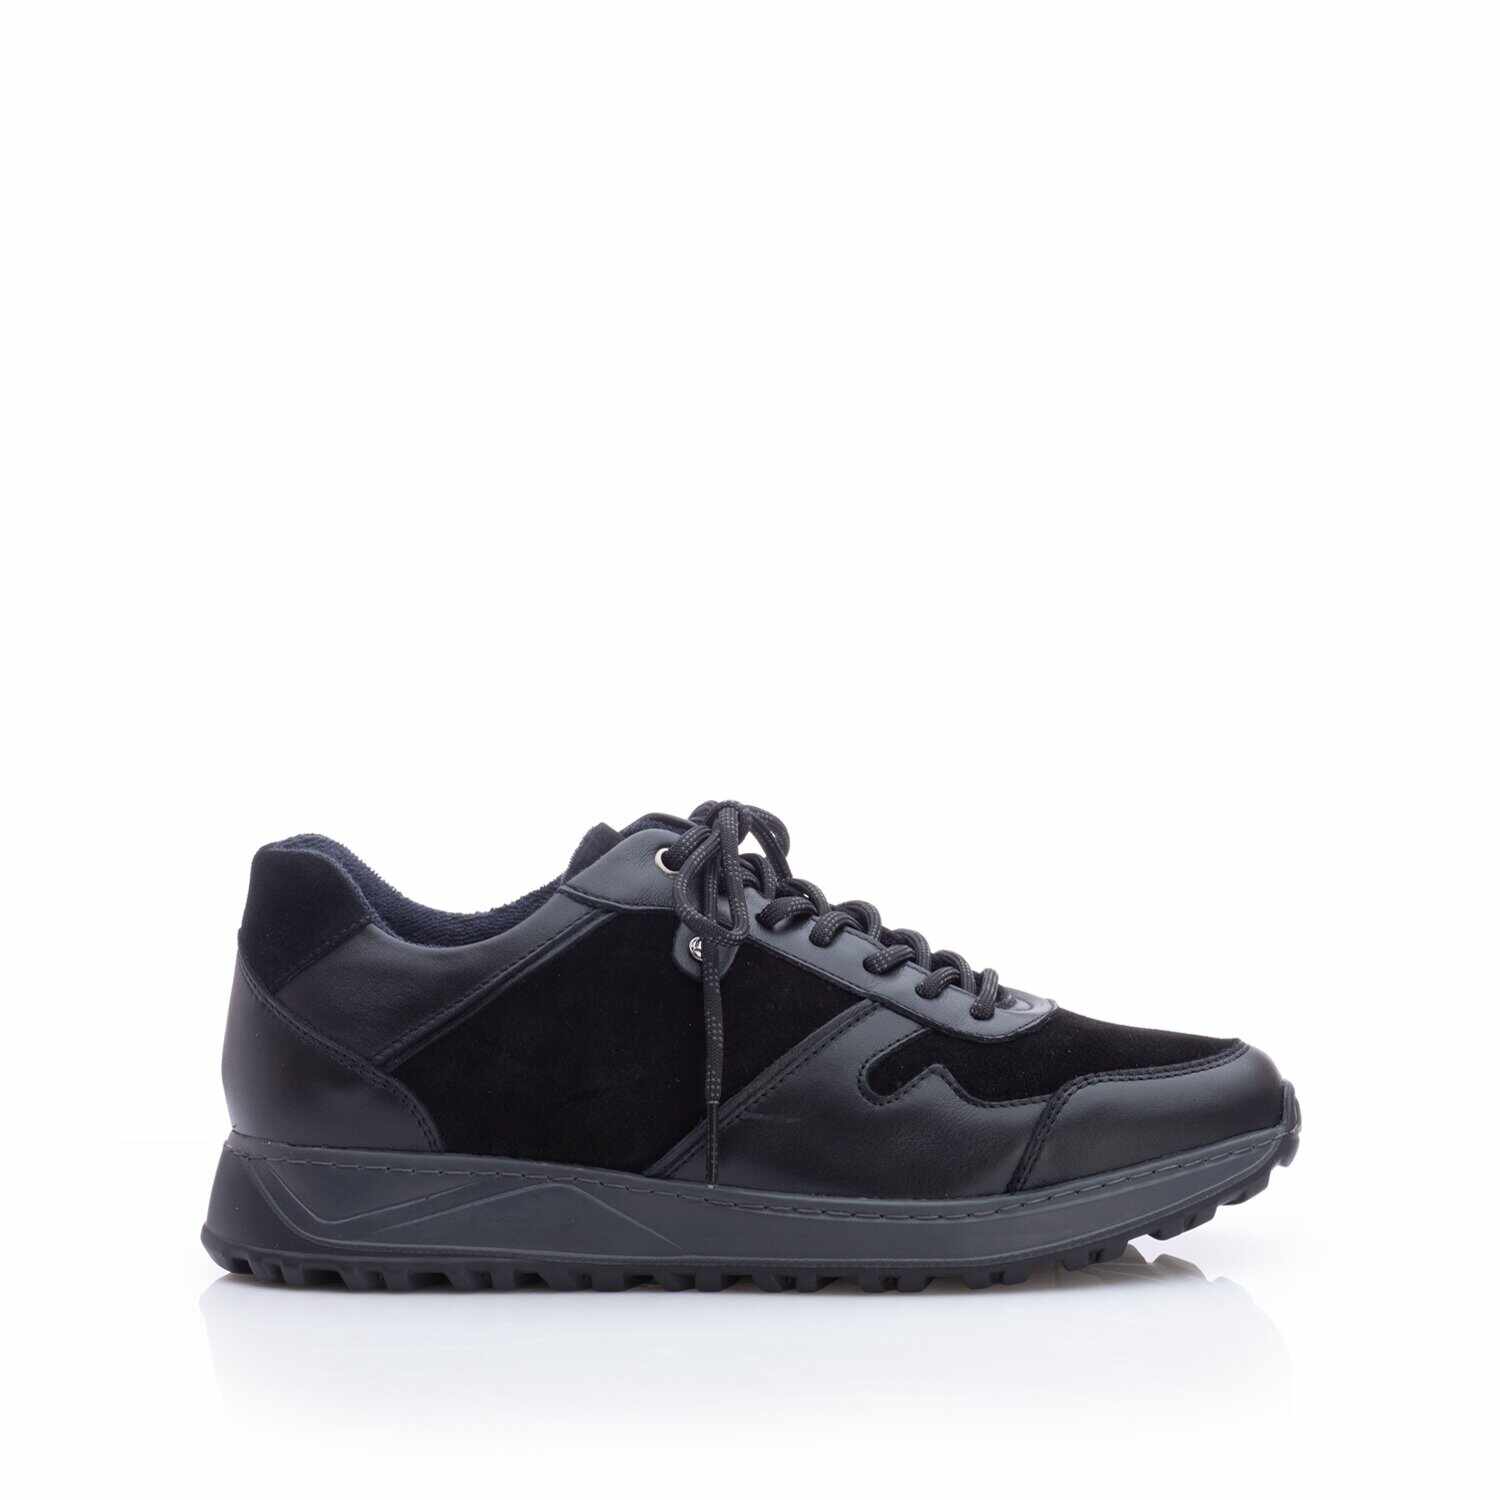 Pantofi sport barbati din piele naturala, Leofex - 670 Negru Box Velur